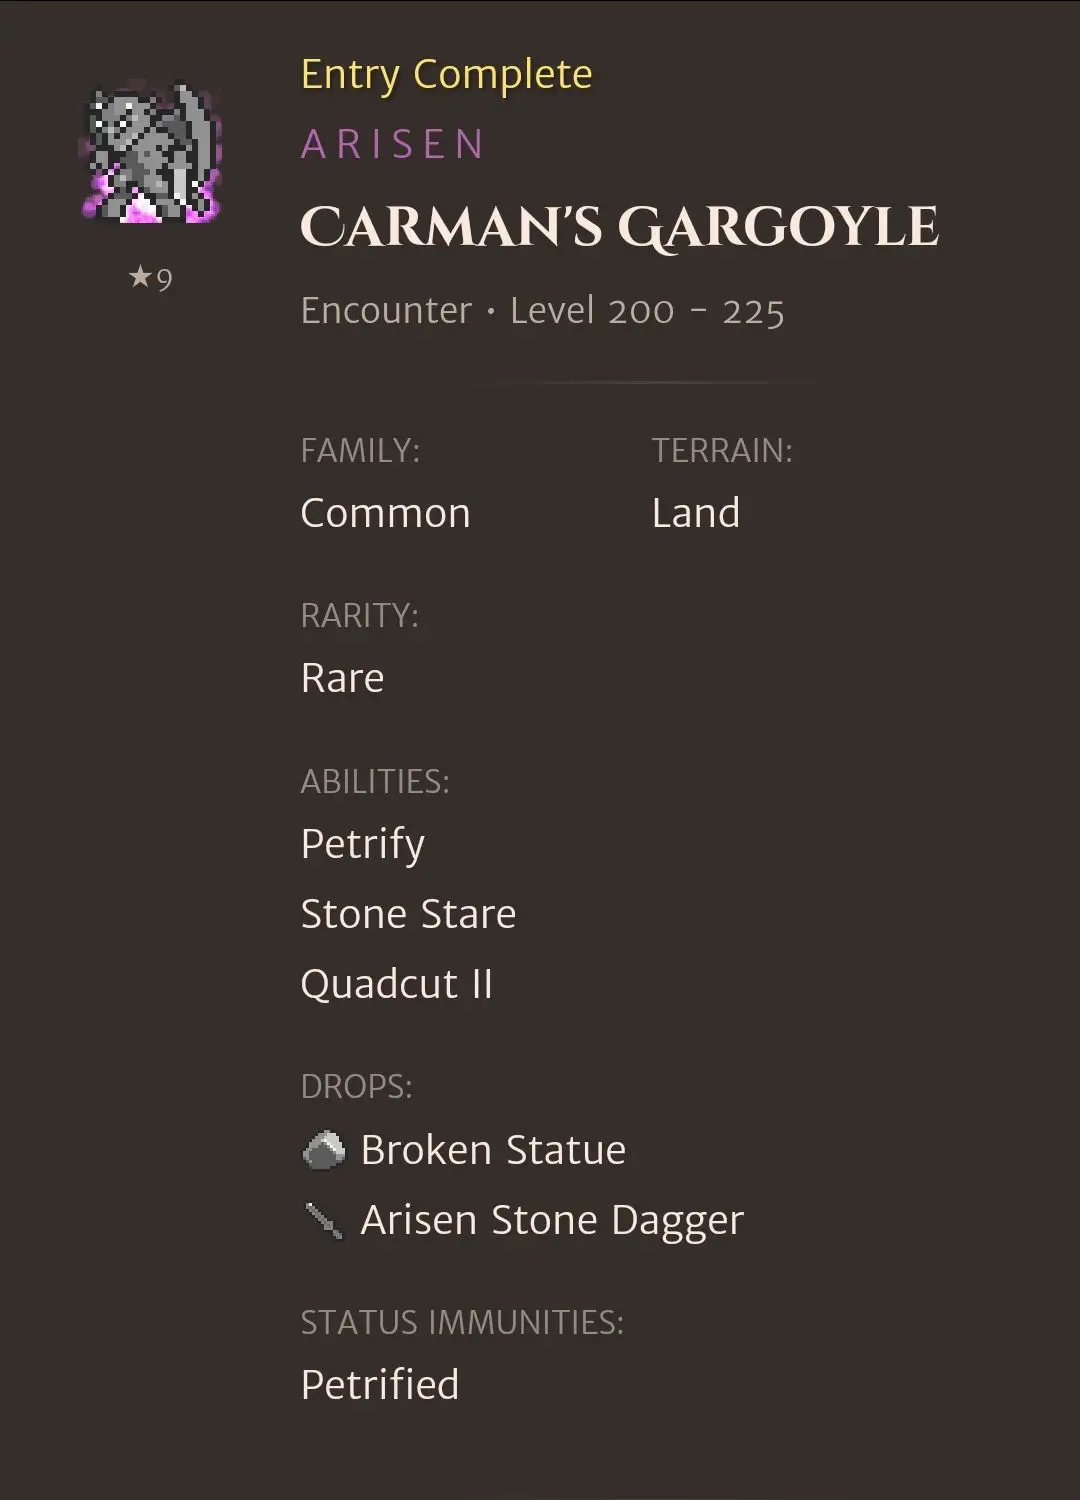 Arisen Carman's Gargoyle codex entry